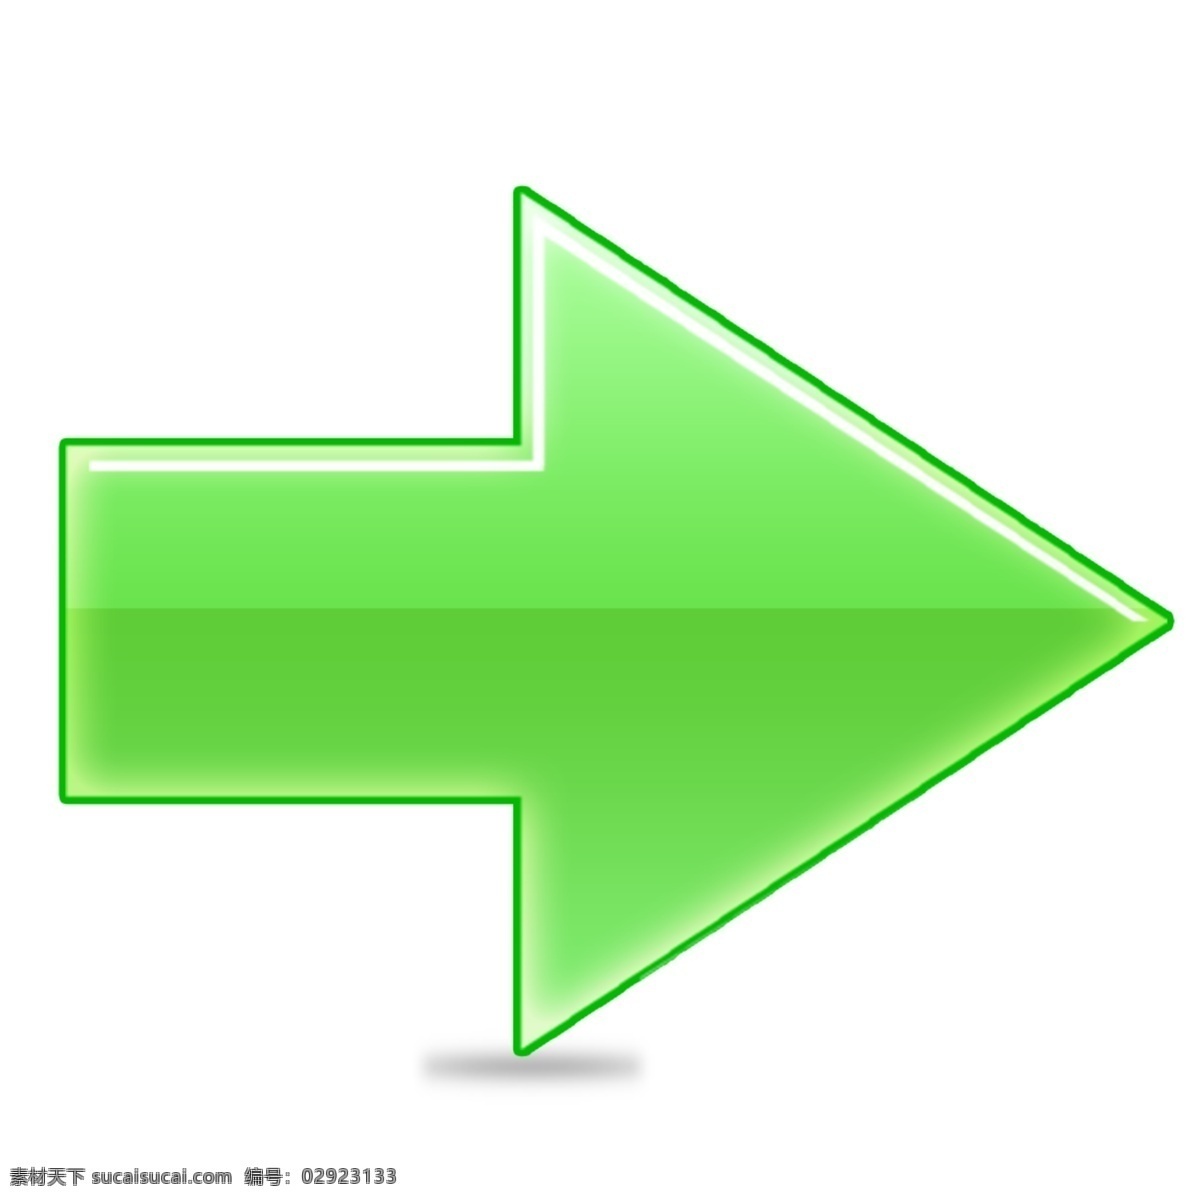 网页 绿色 箭头 指标 icon 图标 图标设计 icon设计 icon图标 网页图标 箭头图标 指标icon 箭头icon 右箭头图标 右箭头 右